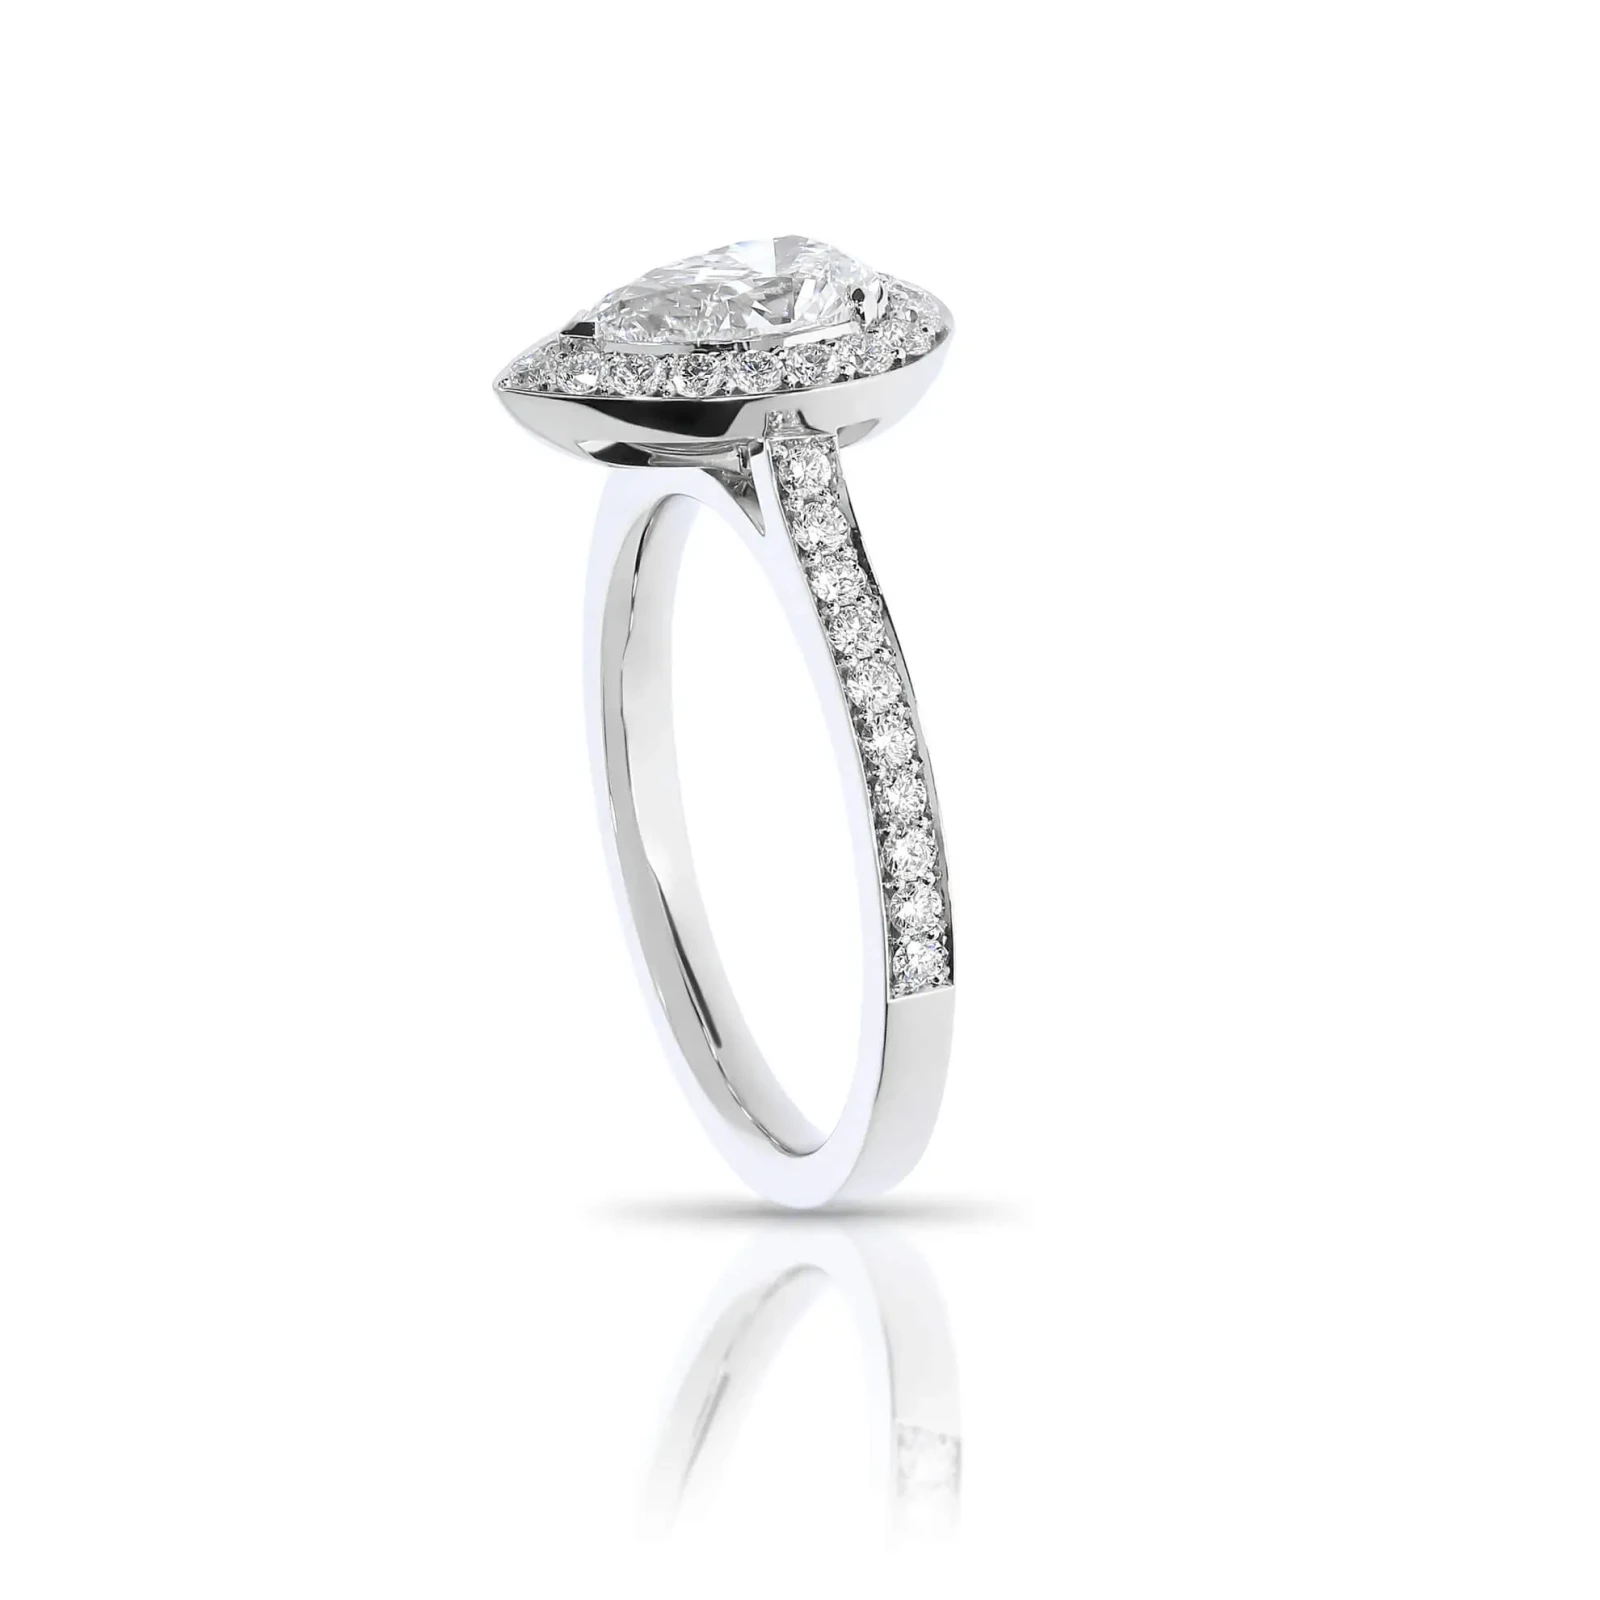 Pavé Set Pear Shaped Diamond Halo Engagement Ring